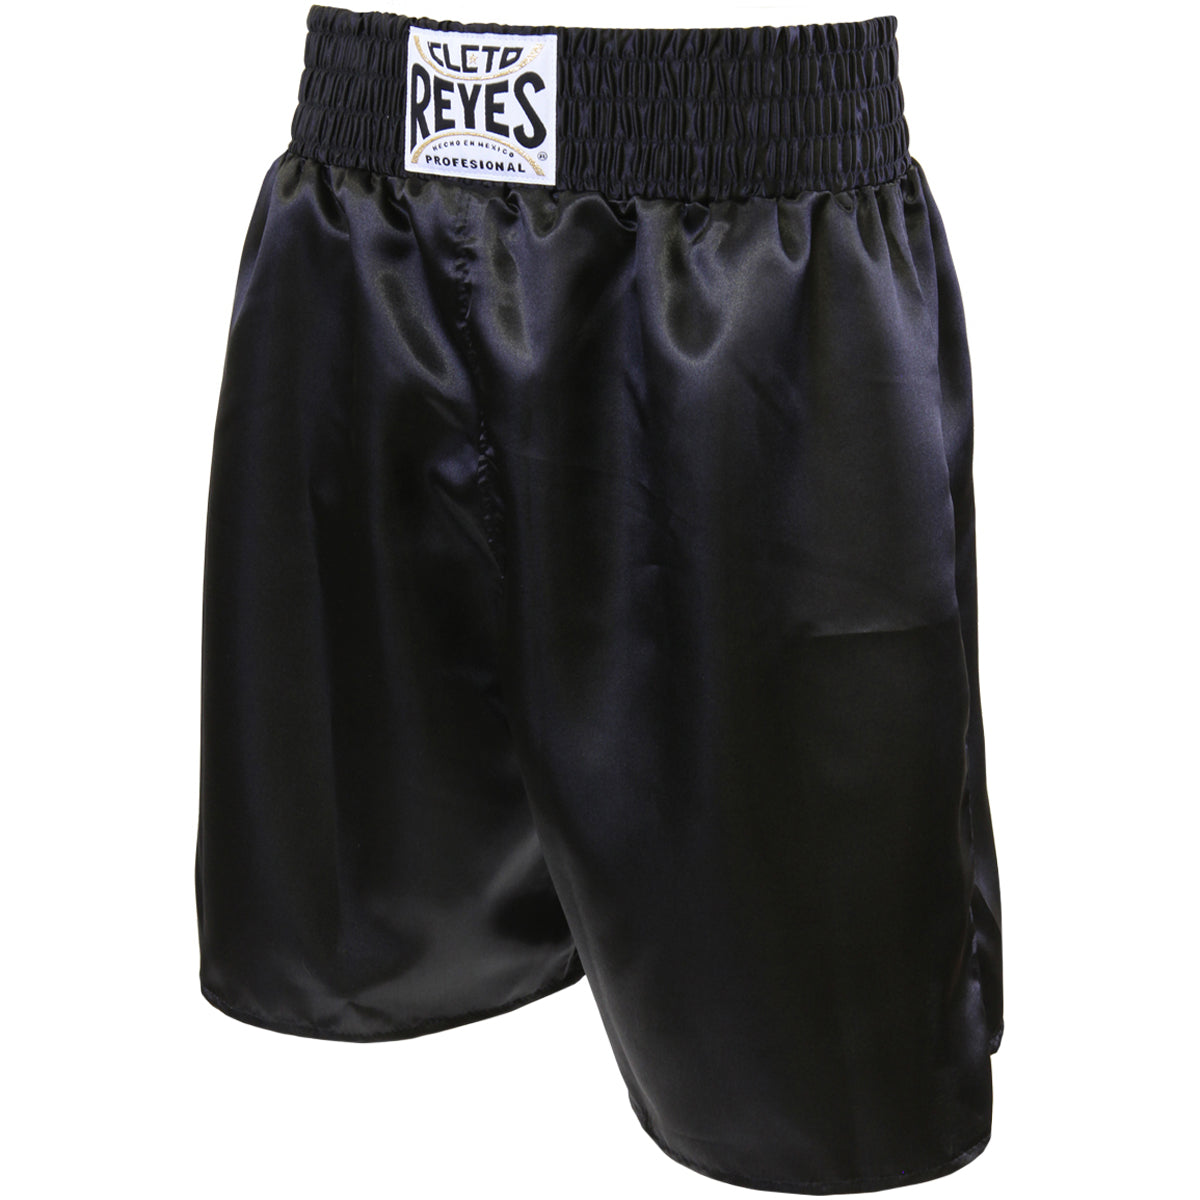 Cleto Reyes Satin Classic Boxing Trunks - Black Cleto Reyes